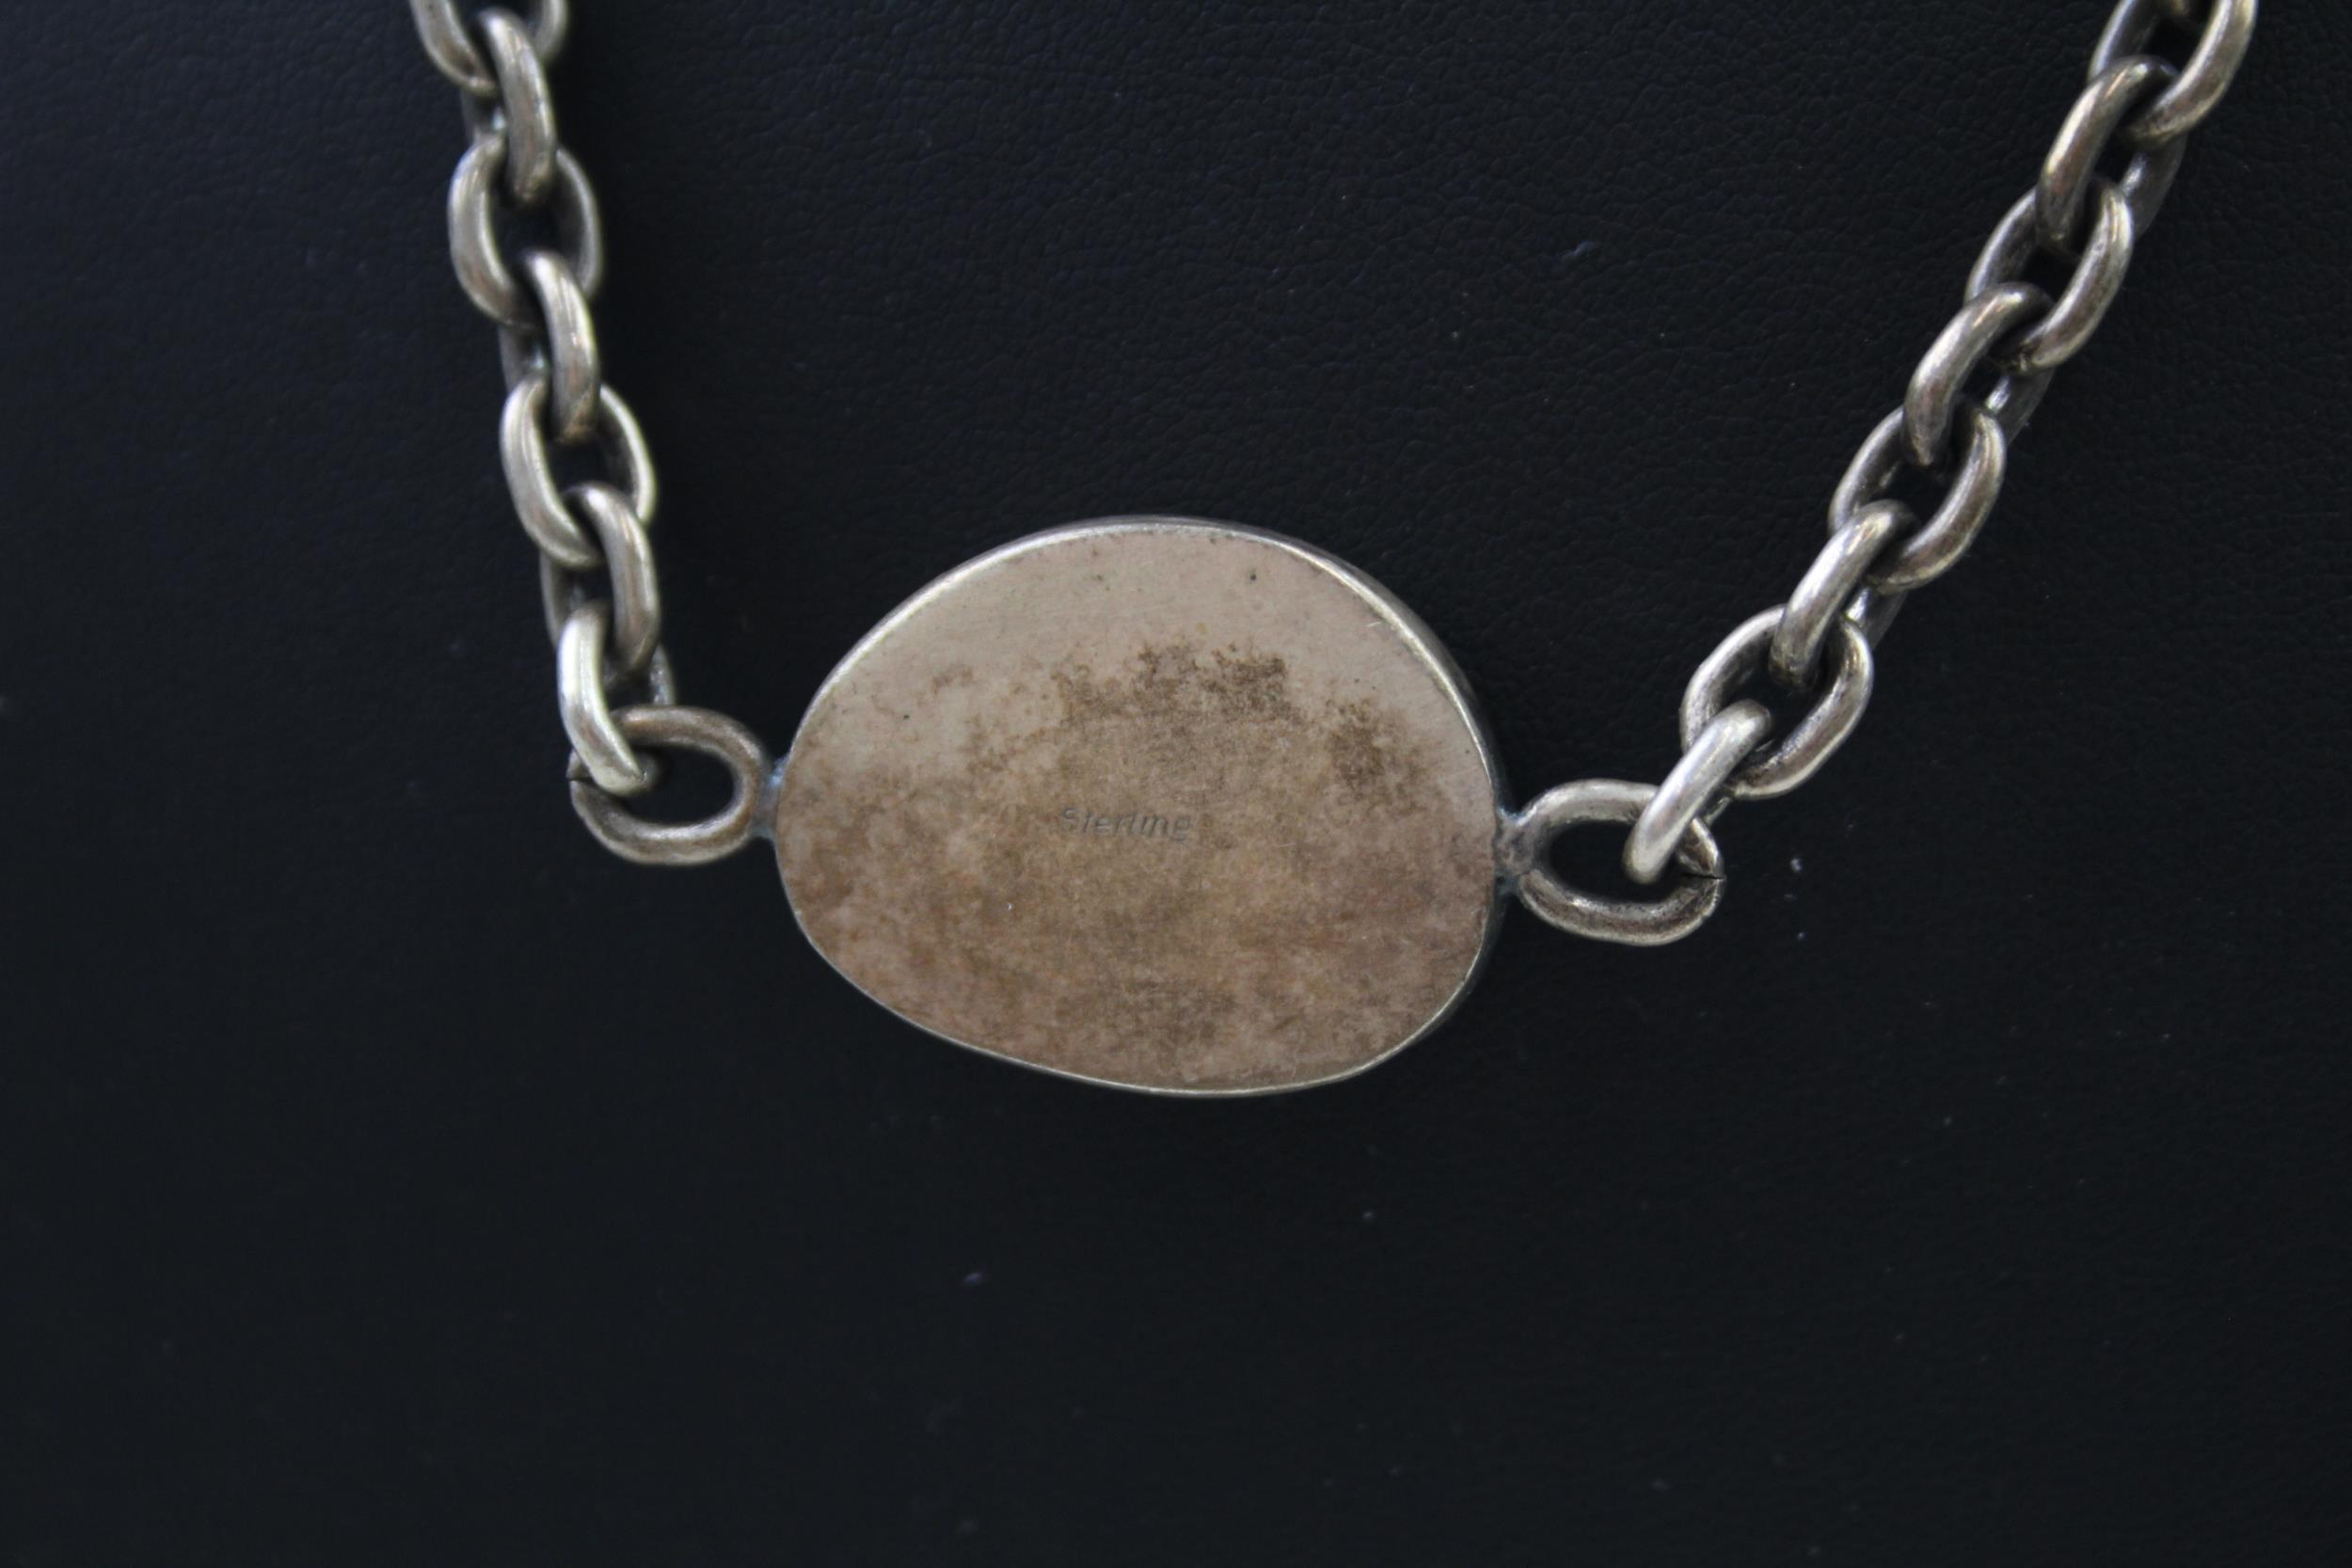 Silver gemstone pendant necklace (59g) - Image 6 of 6